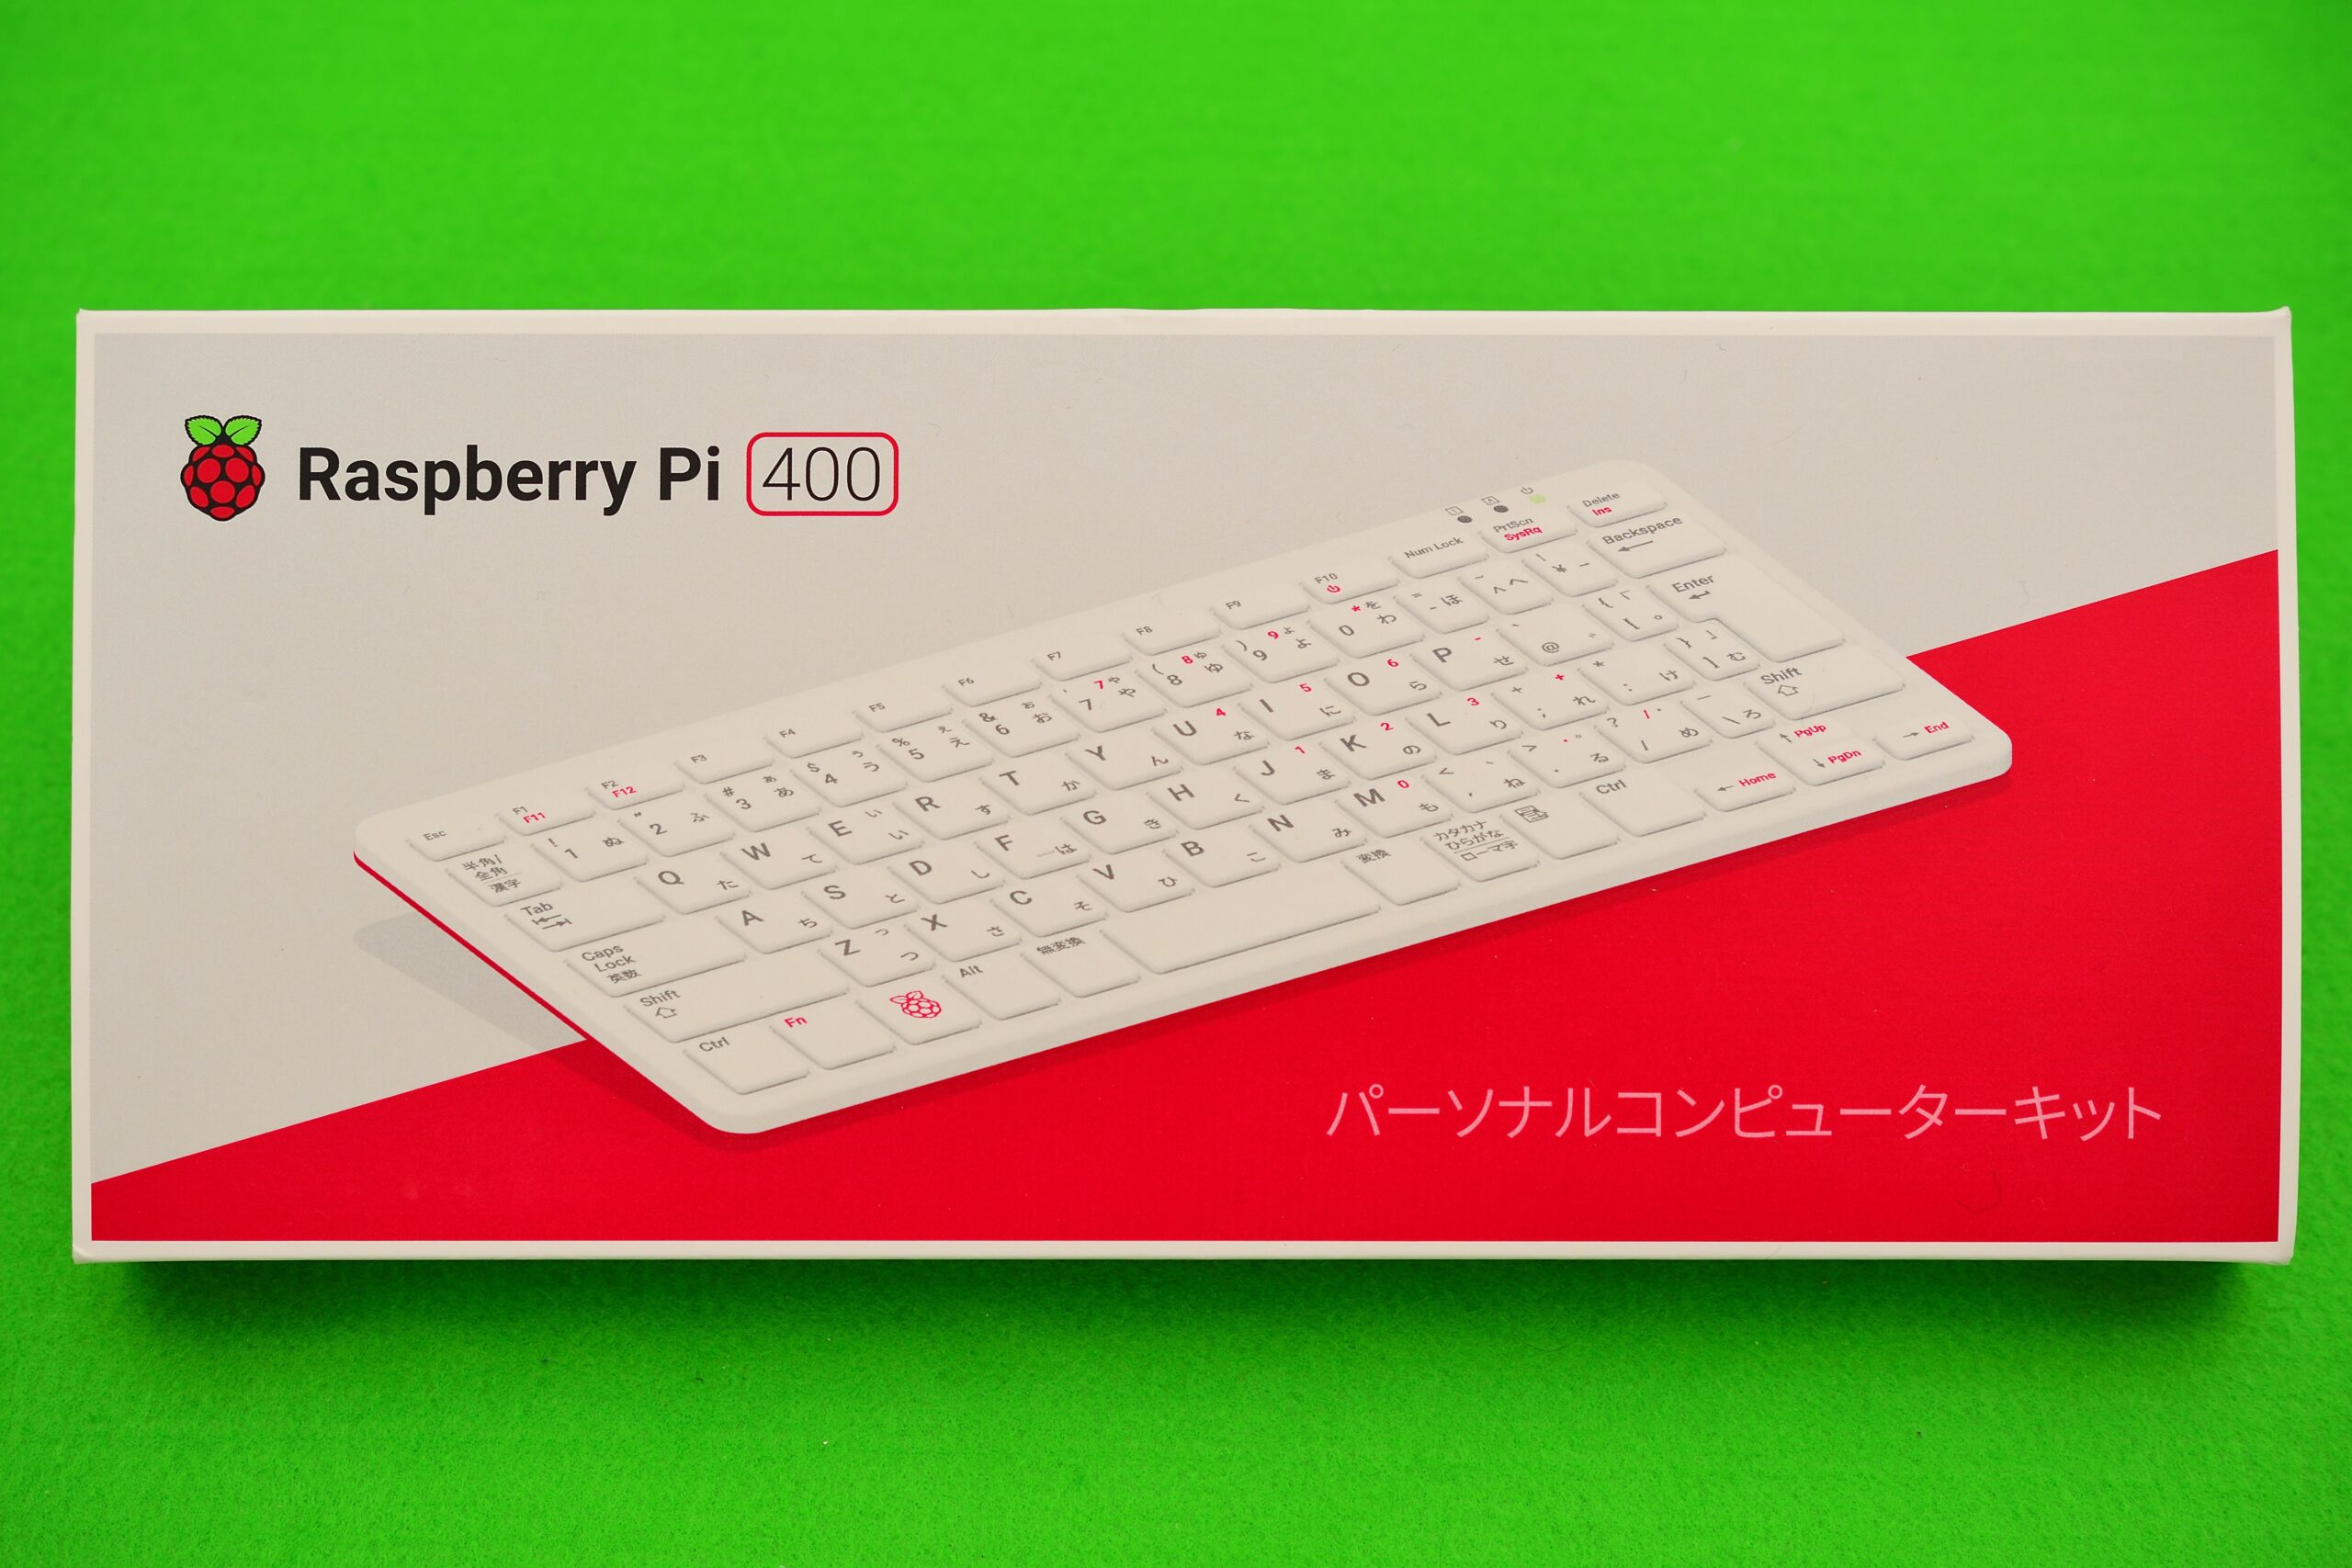 Raspberry Pi 400日本版を分解してみた - 2ページ目 (4ページ中) - まず分解。